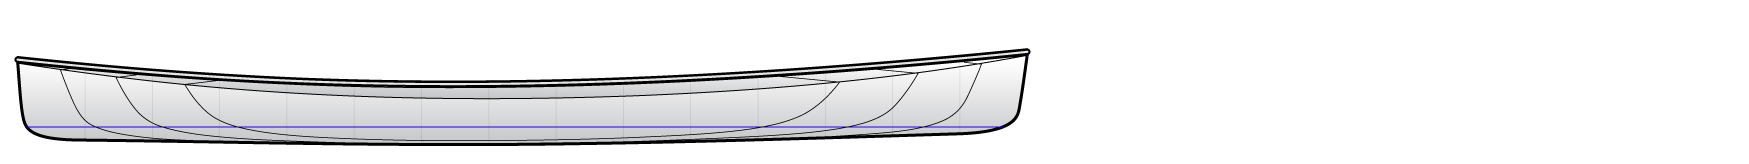 Kite Solo Wood Strip Tripping Canoe